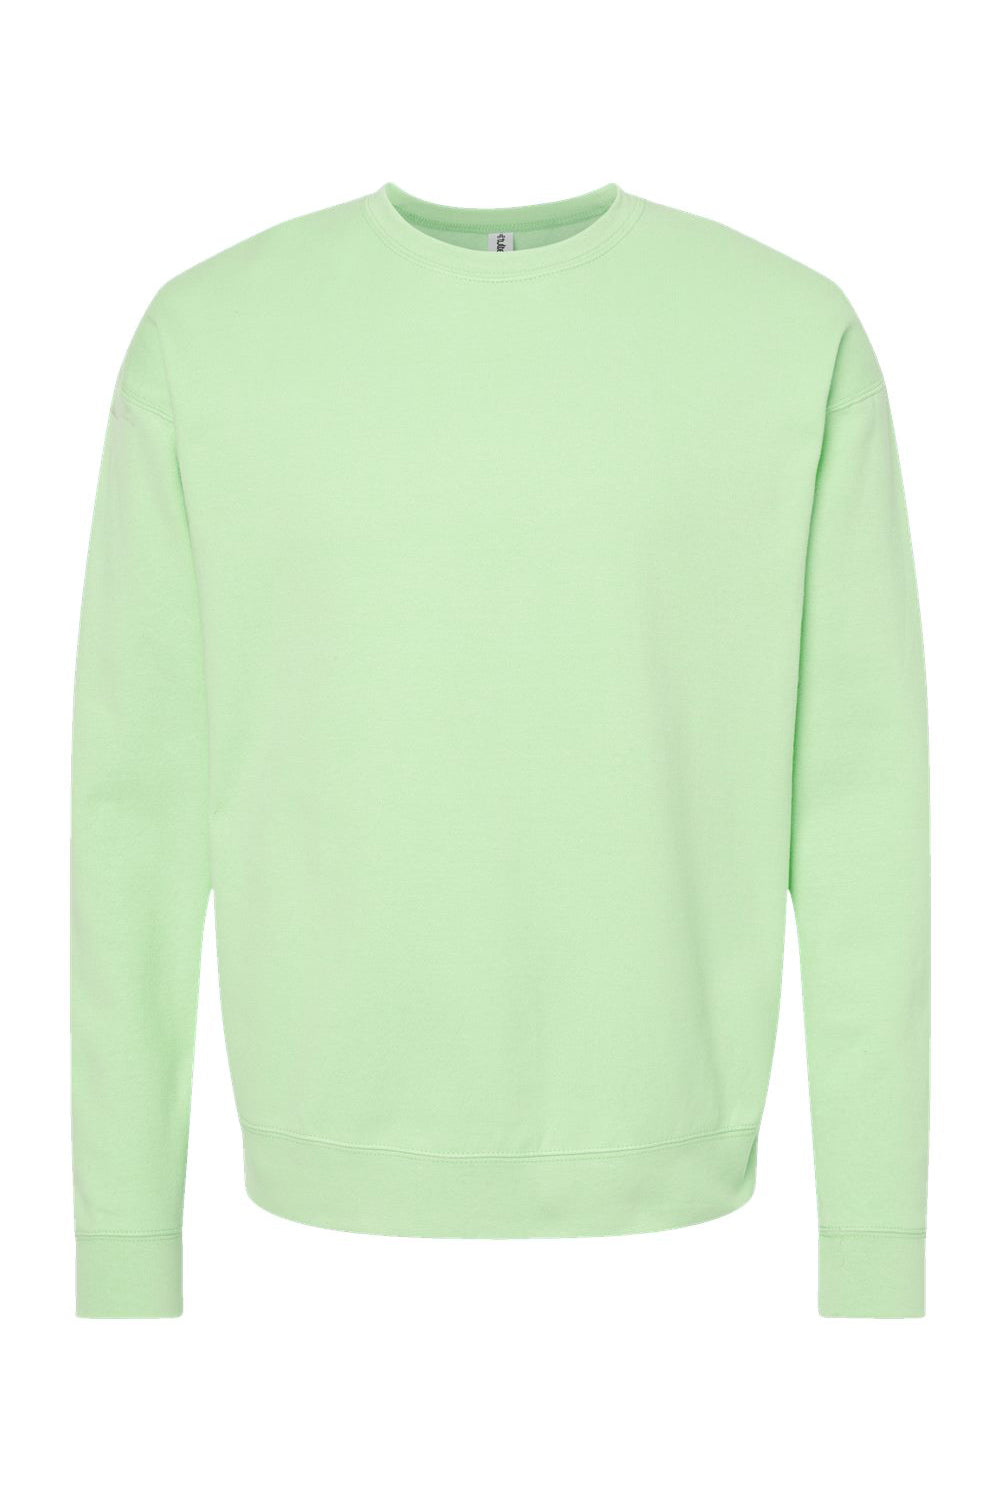 Tultex 340 Mens Fleece Crewneck Sweatshirt Neo Mint Green Flat Front